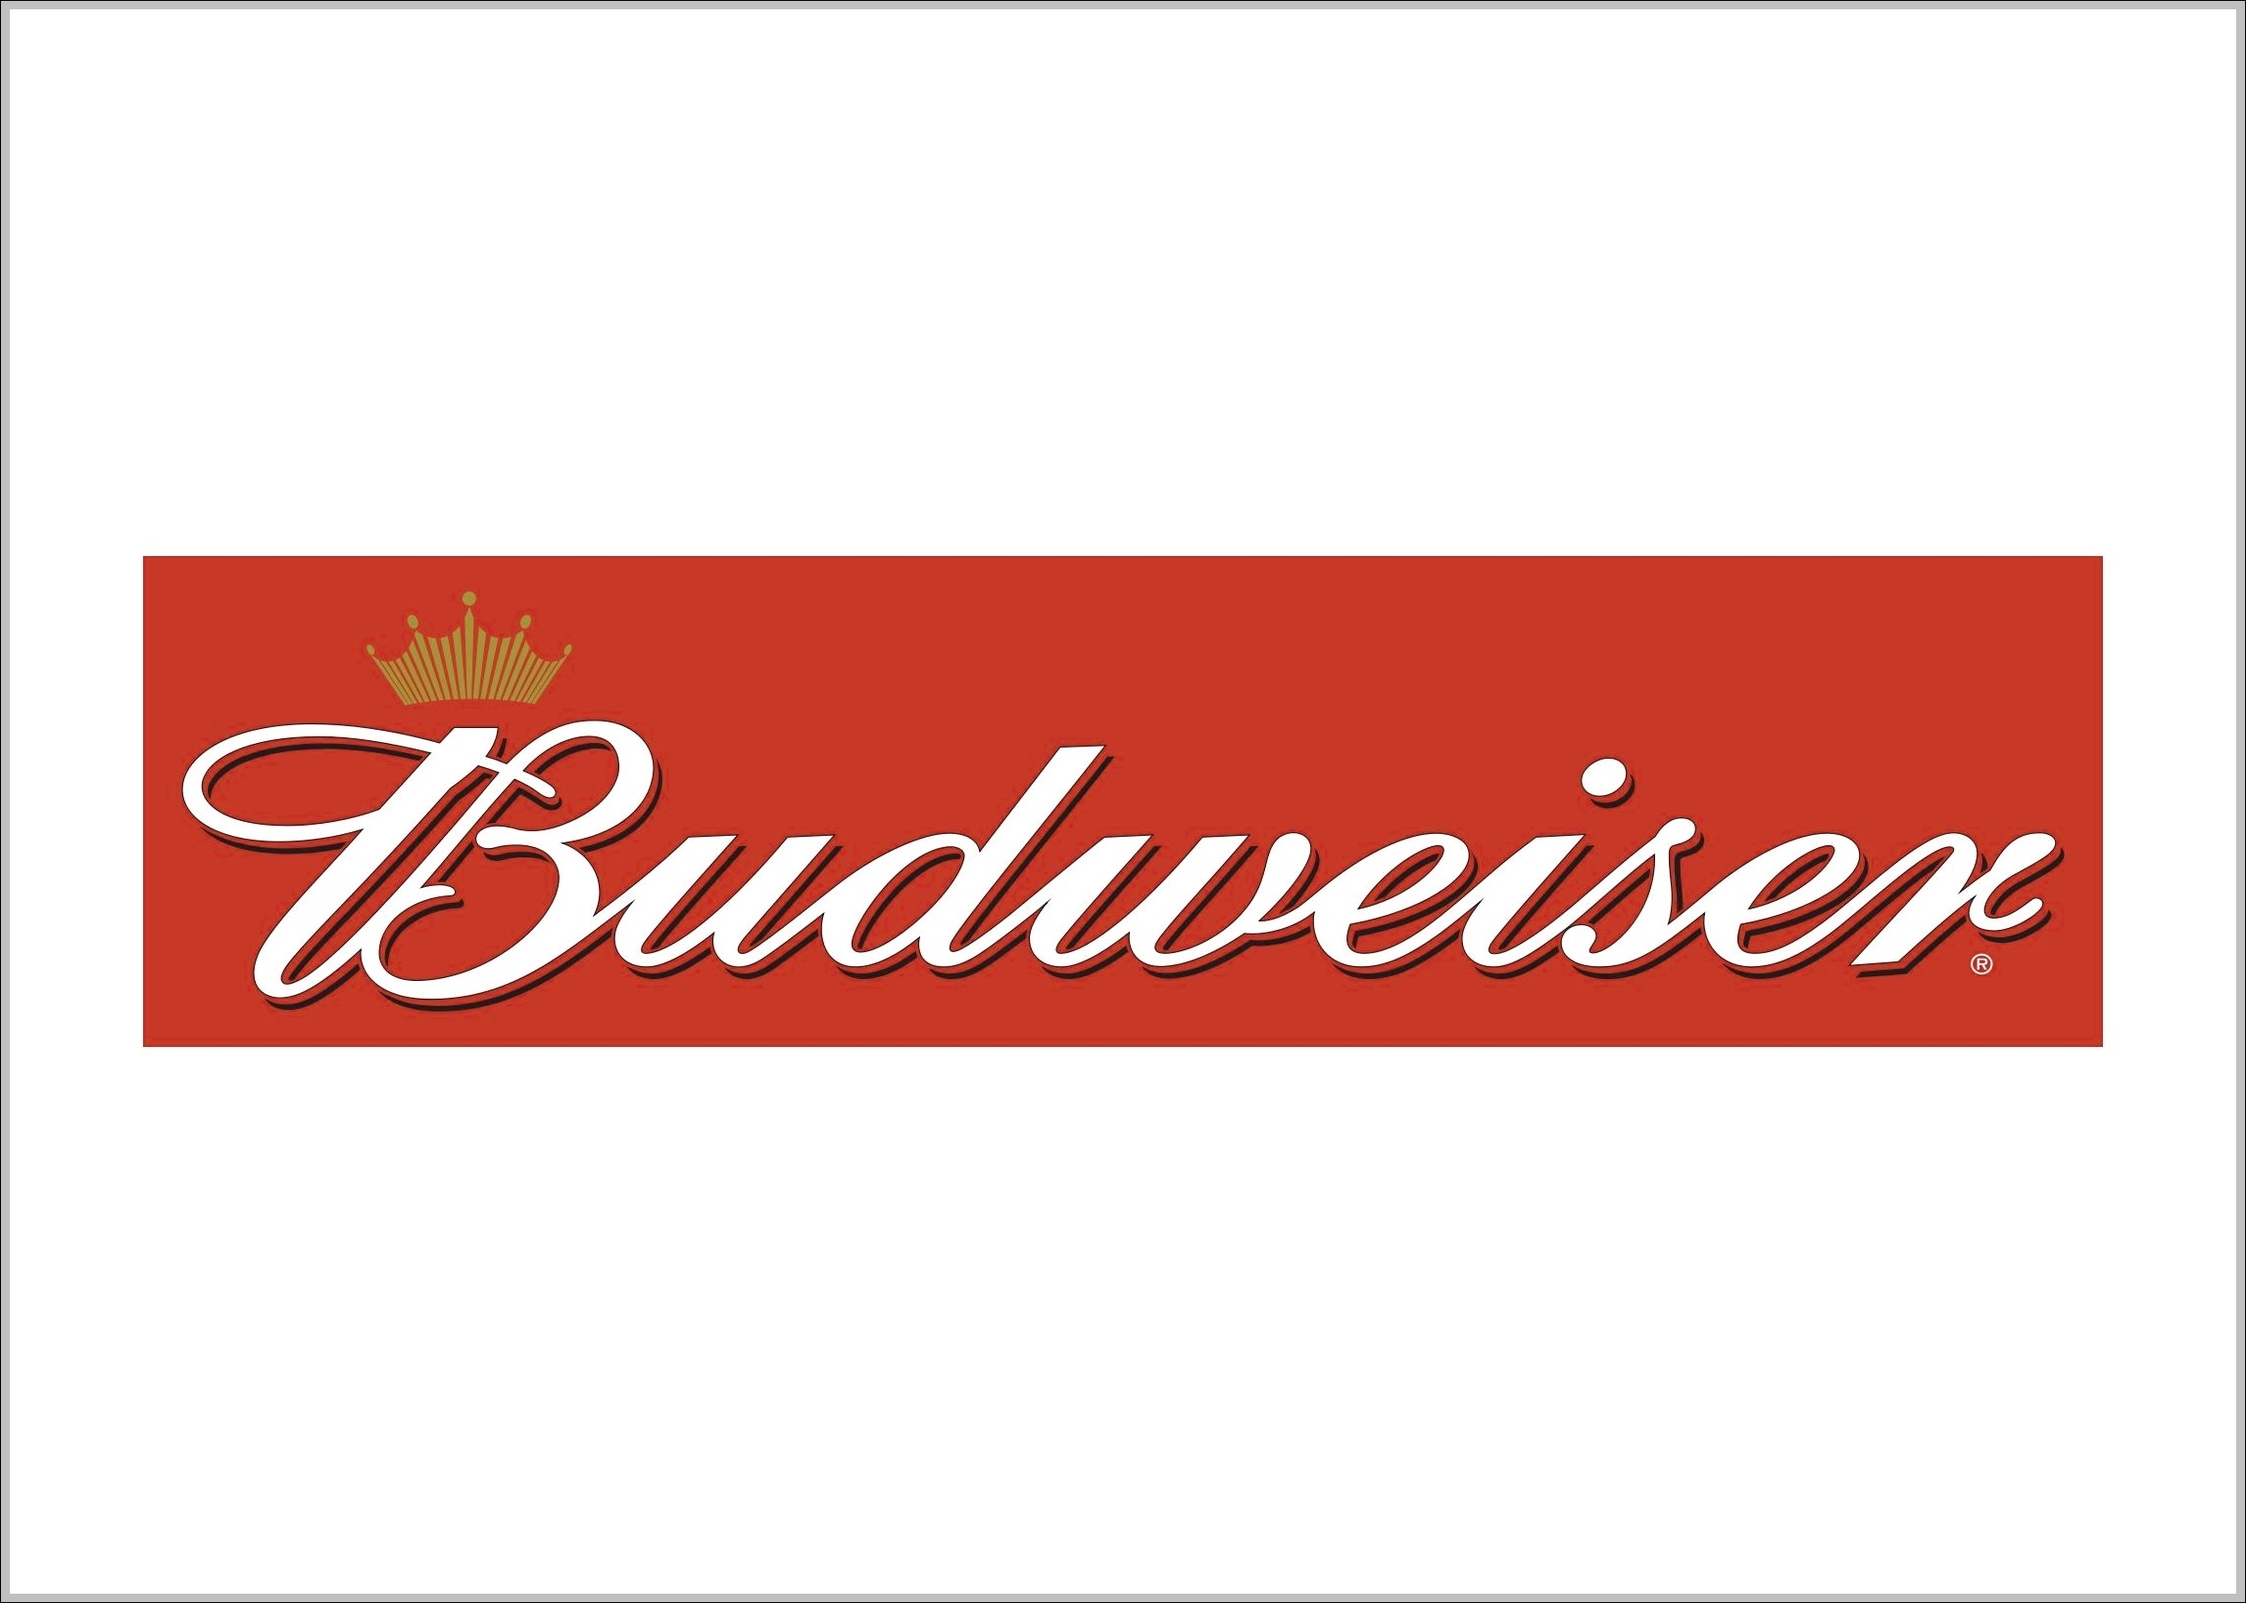 Budweiser symbol logo